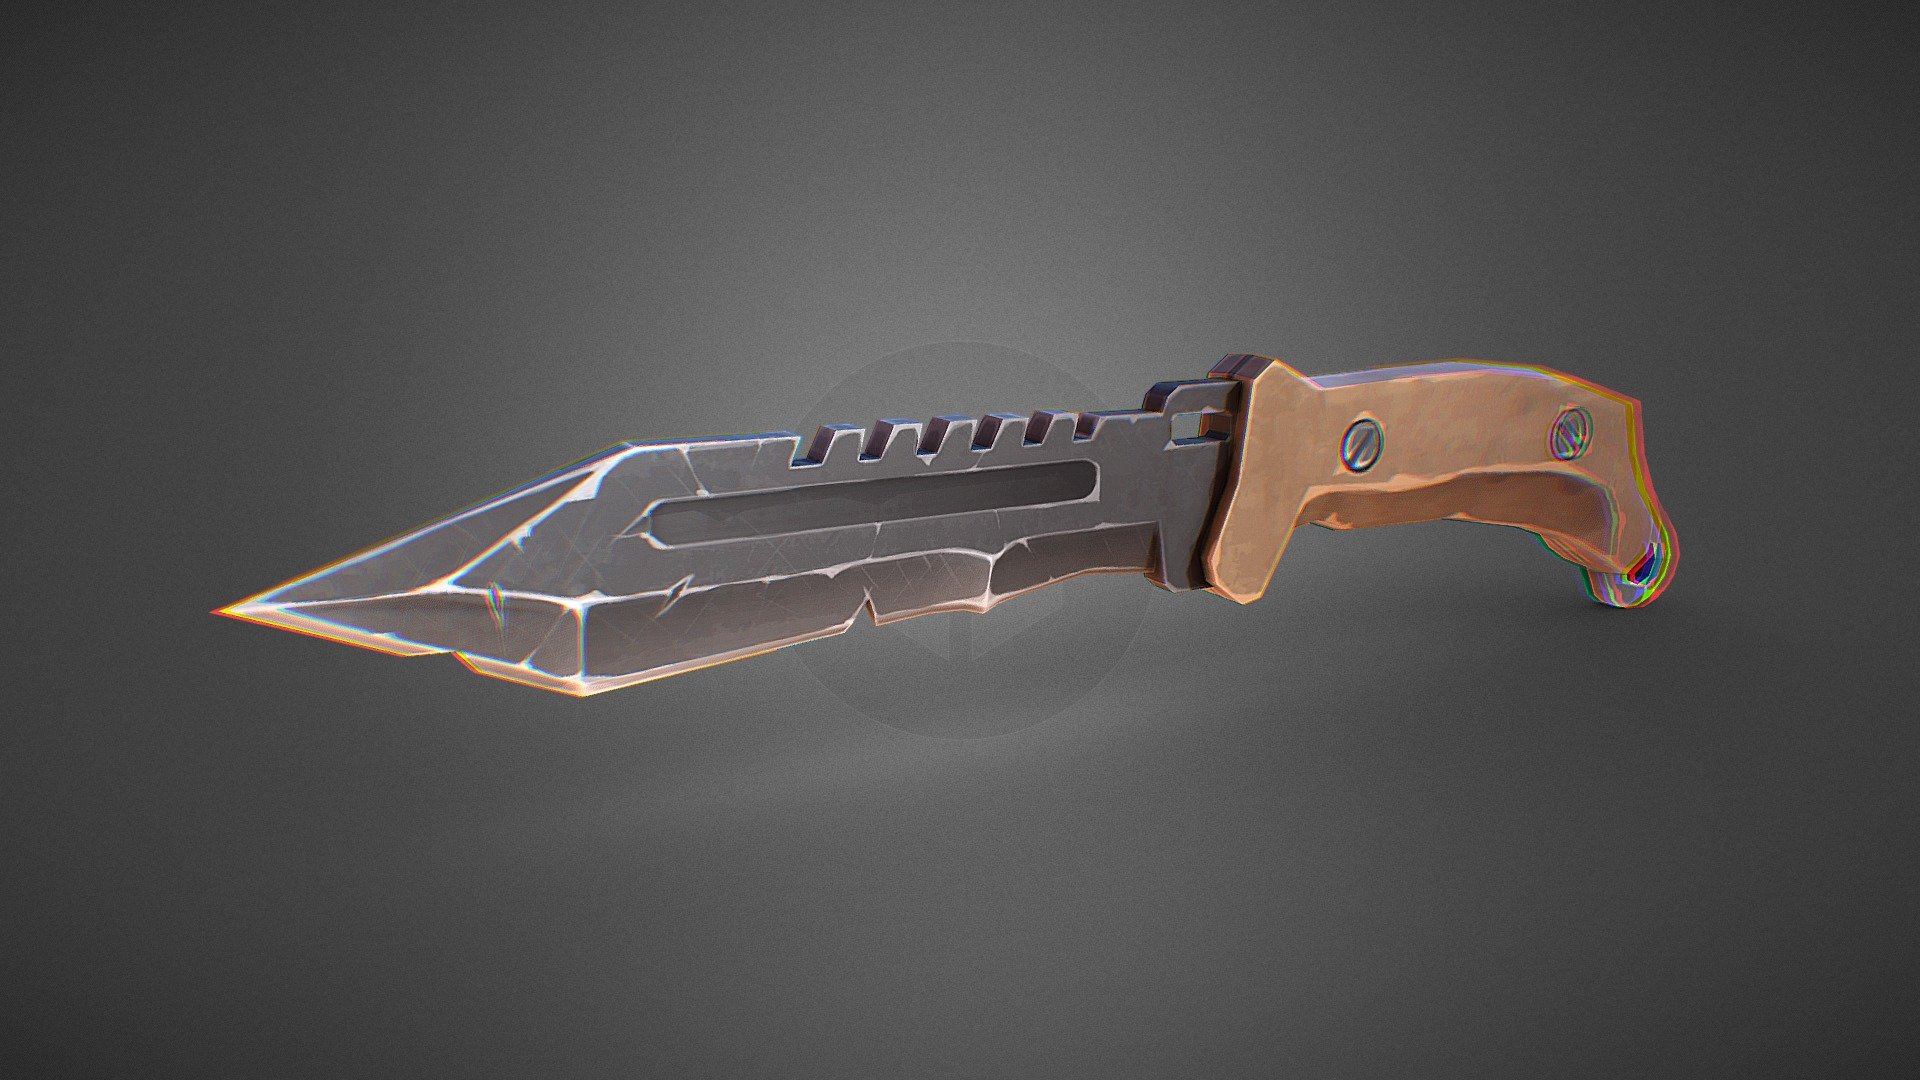 Stylized low-poly knife - 3D model by Vladimir Polygalov (@jpegy ...